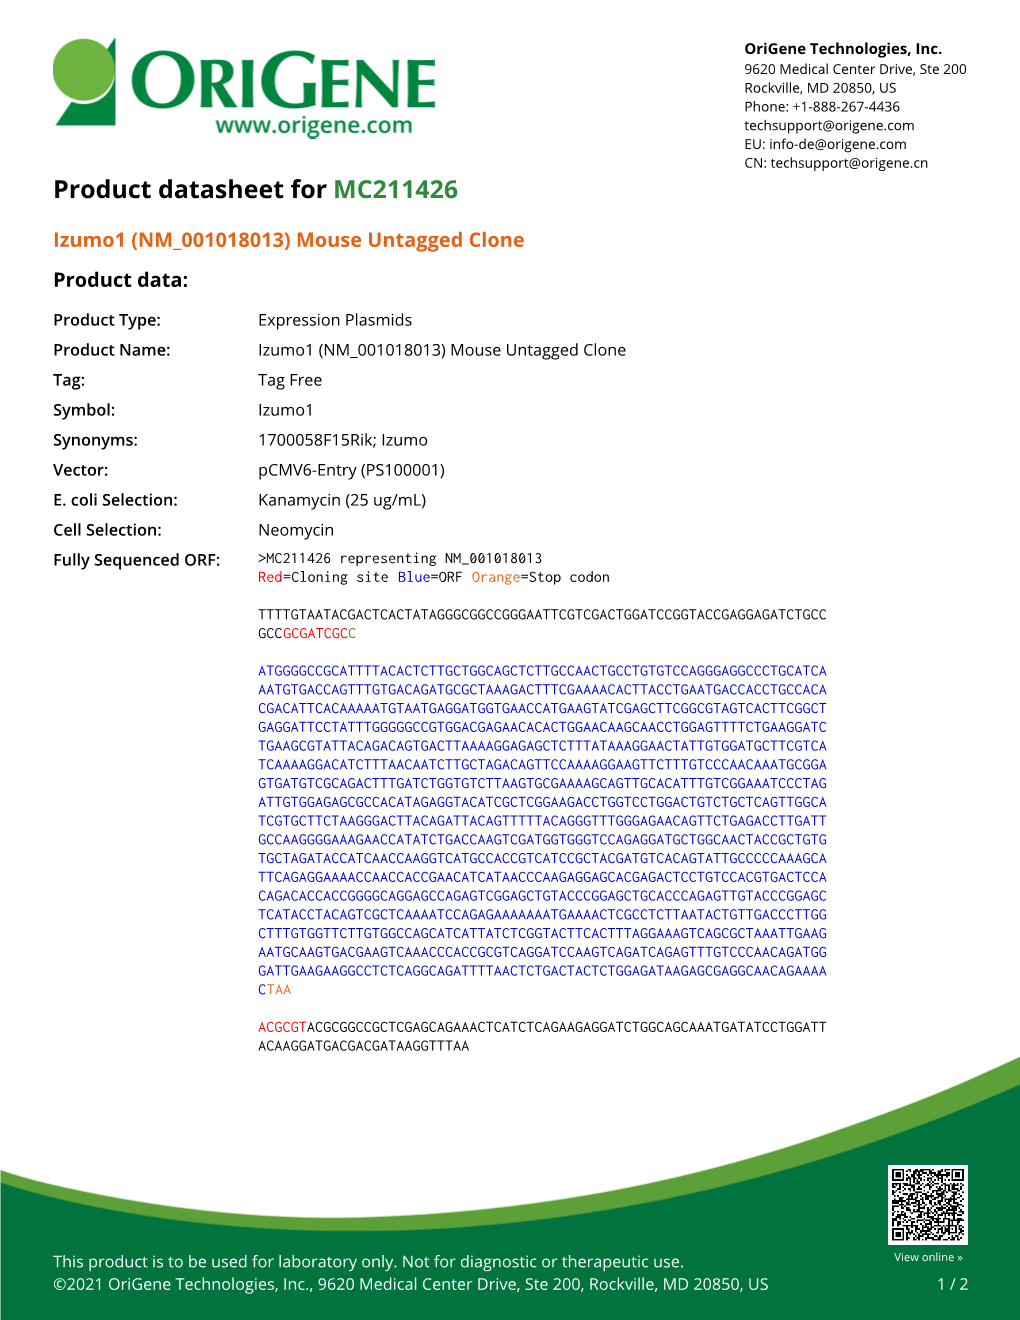 Izumo1 (NM 001018013) Mouse Untagged Clone Product Data